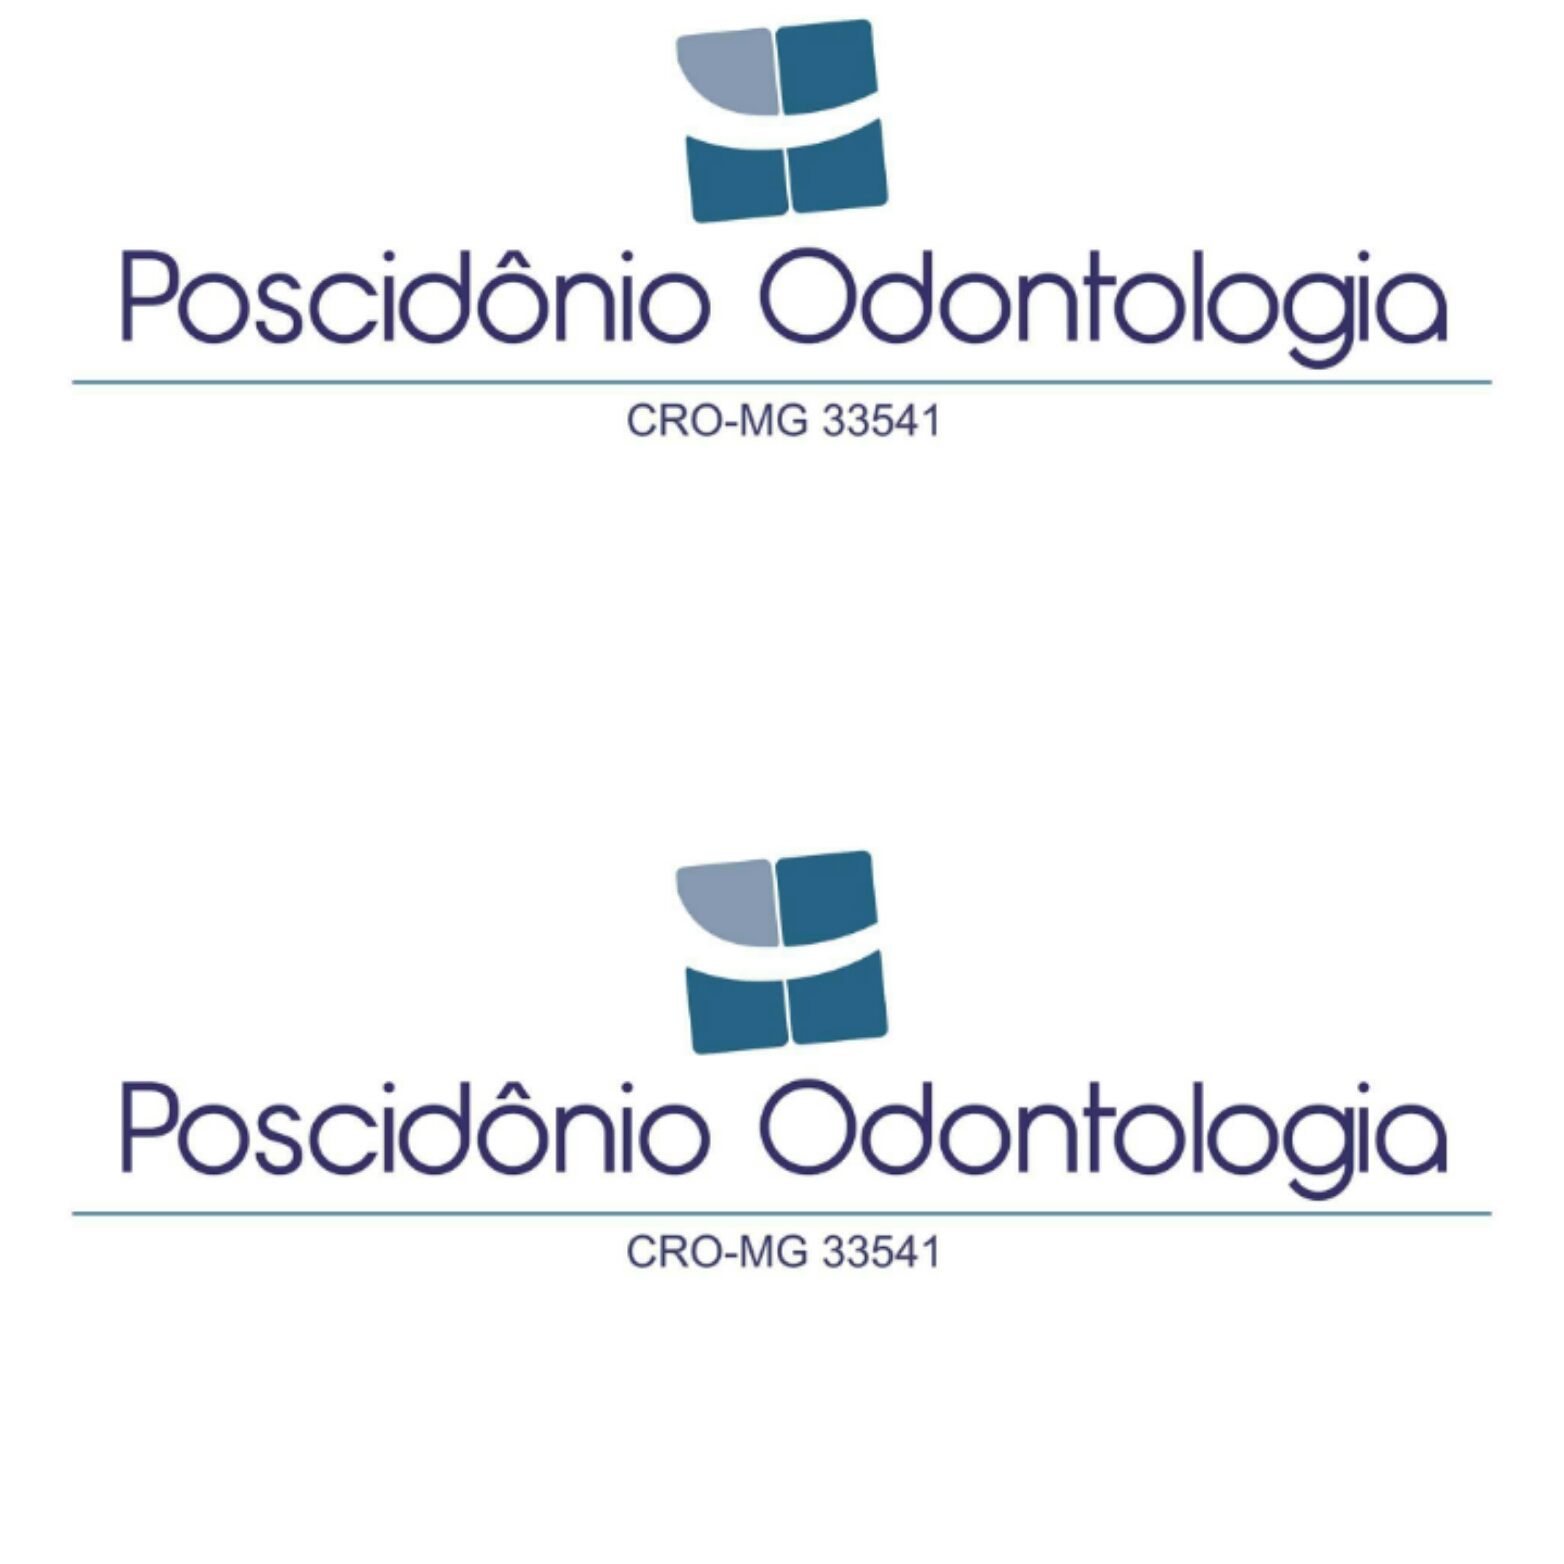 POSCIDÔNIO ODONTOLOGIA - Cirurgiões-Dentistas - Implantodontia - Muzambinho, MG